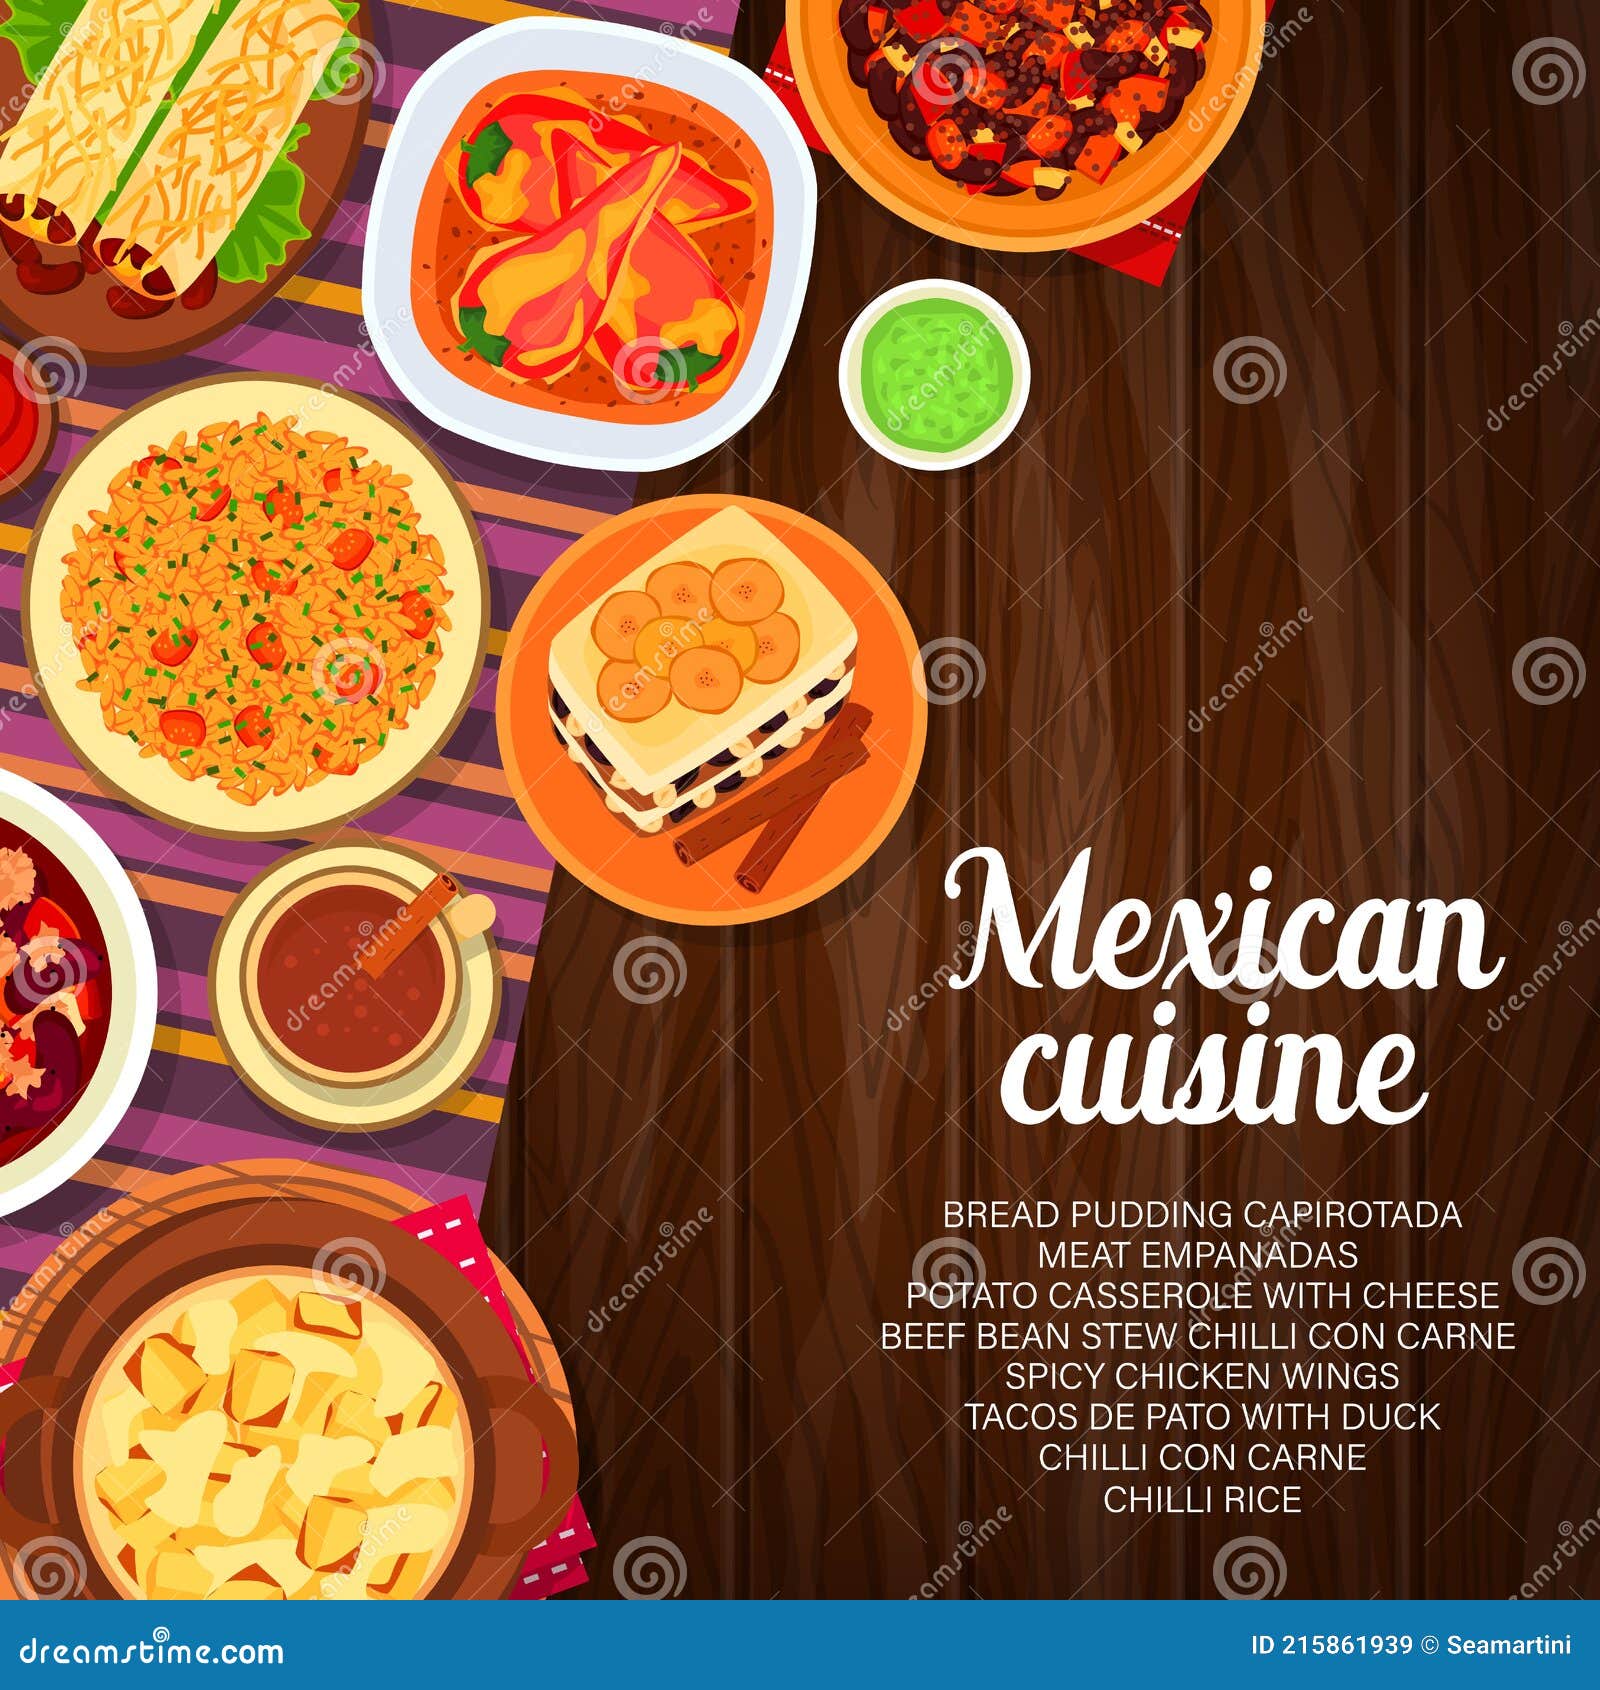 Mexican Cuisine, Mexico Food Cartoon Vector Poster Stock Vector ...